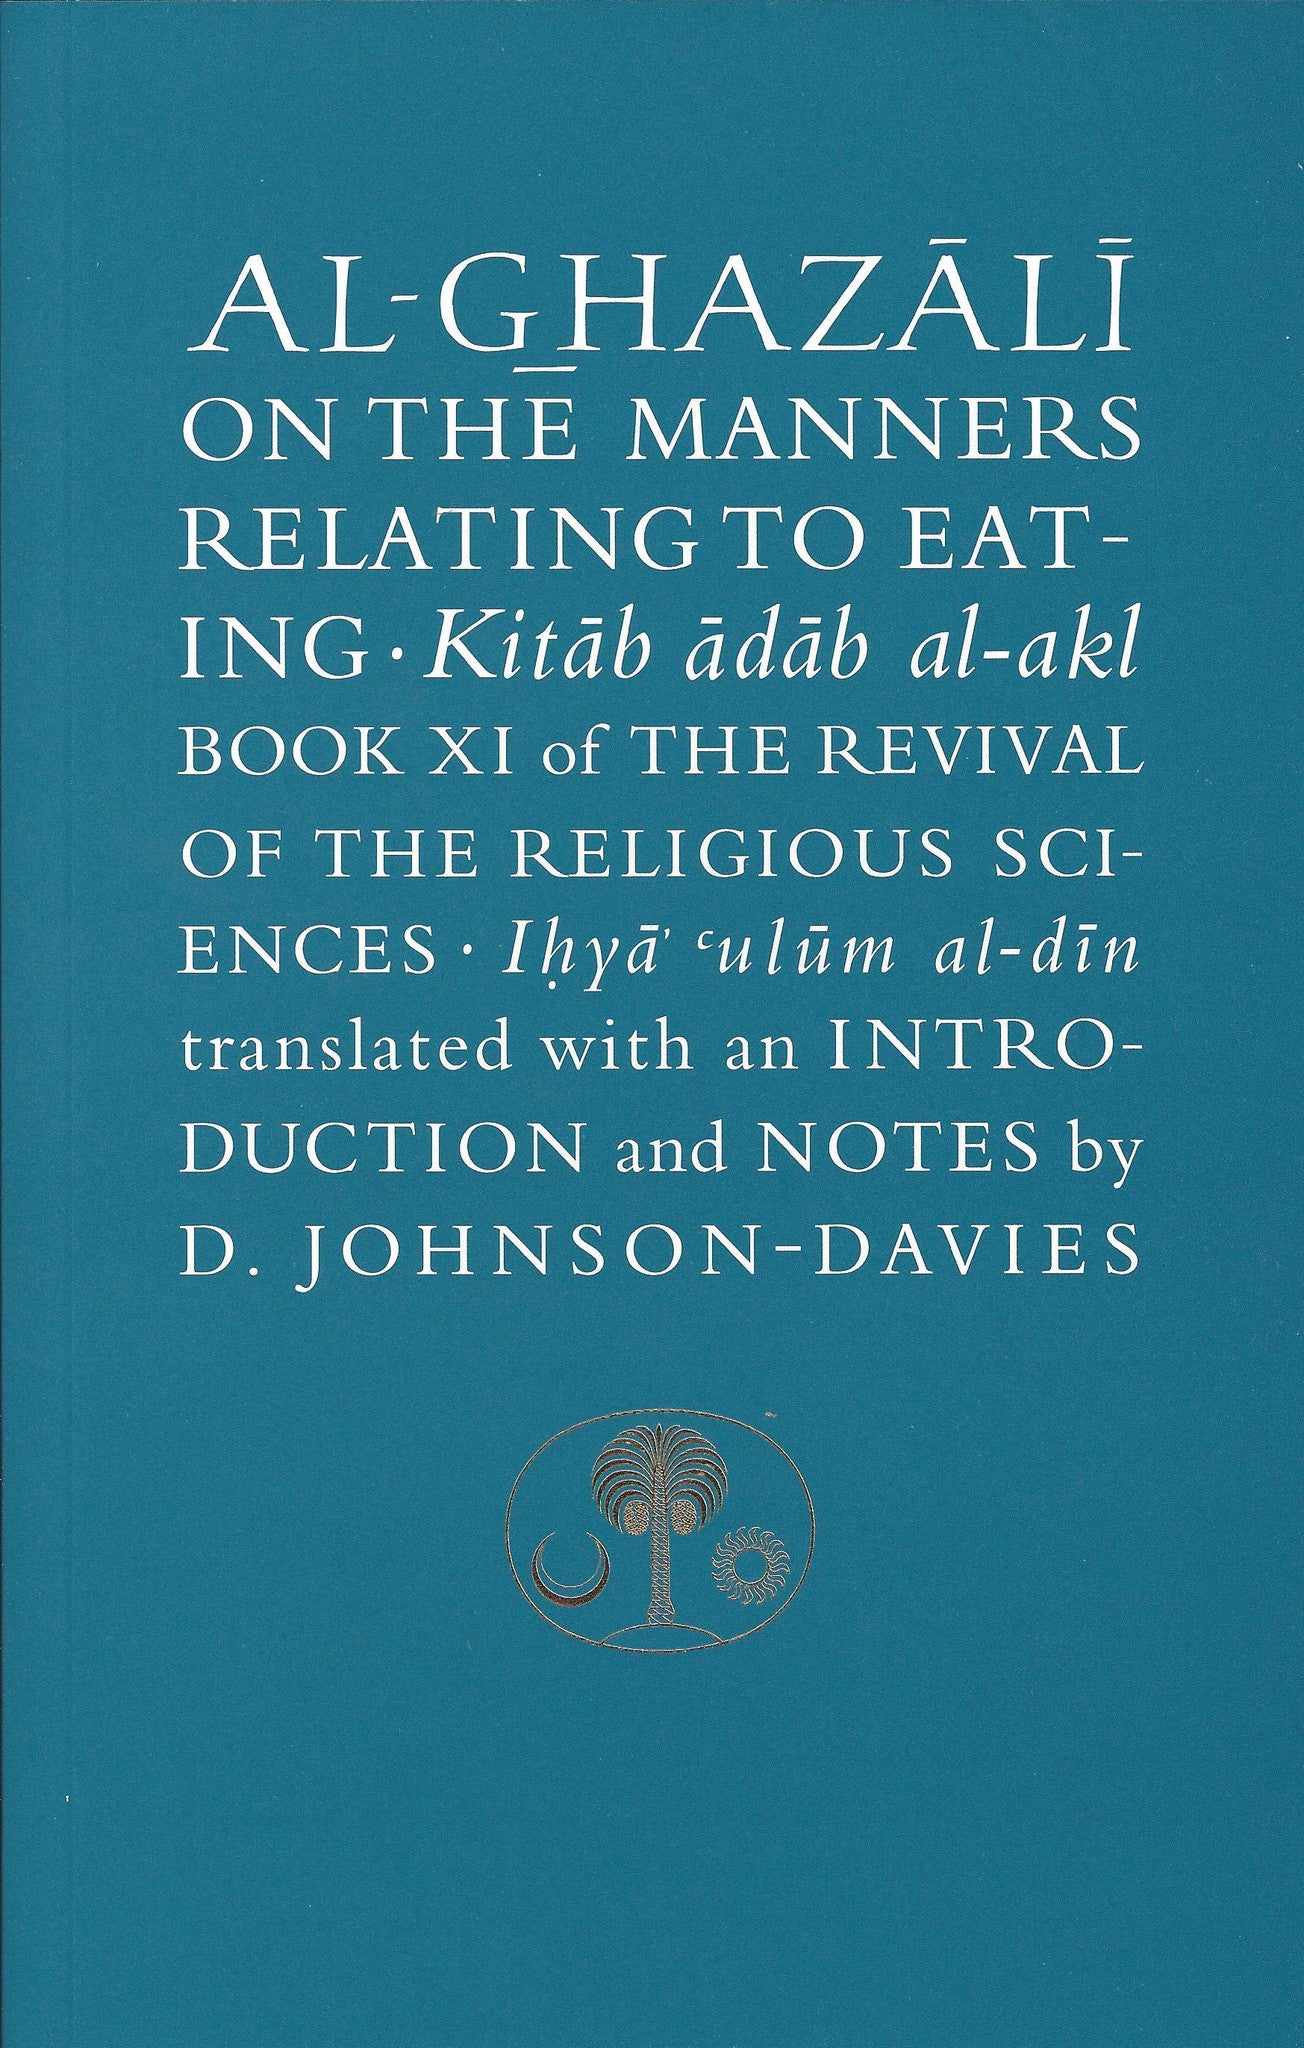 Al-Ghazali on the Manners Relating to Eating: Book XI of the Revival of the Religious Sciences (Ghazali Series) , Book - Daybreak International Bookstore, Daybreak Press Global Bookshop
